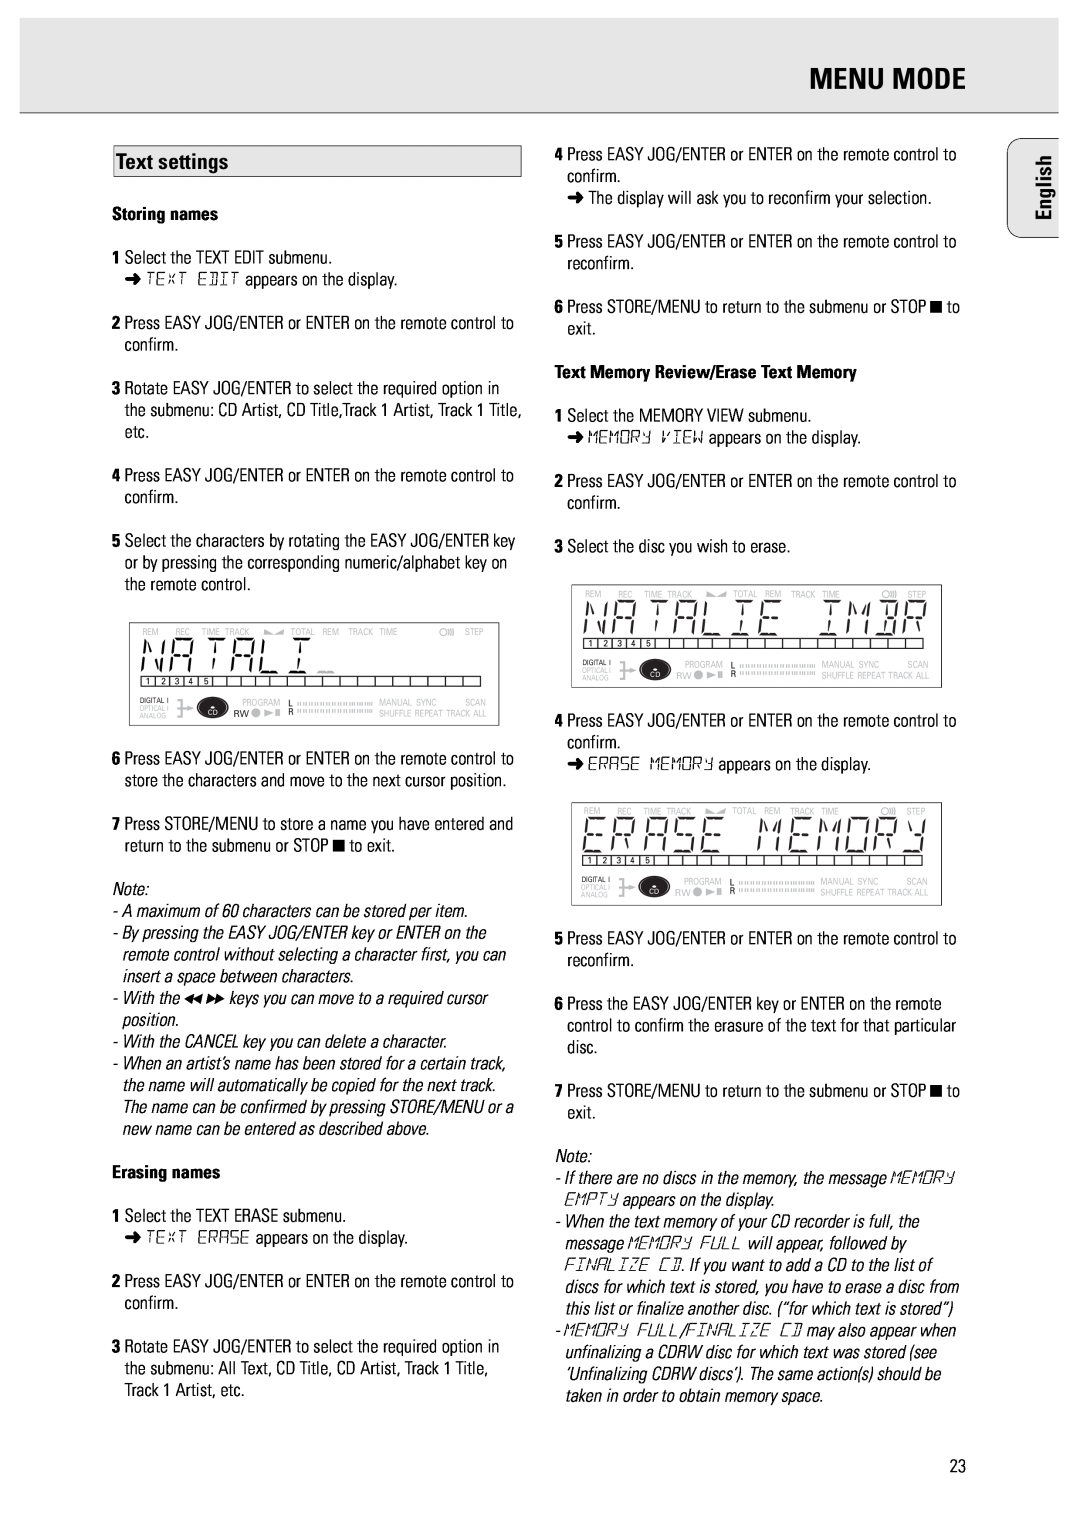 Philips CDR570/00 manual Menu Mode, Text settings, English 